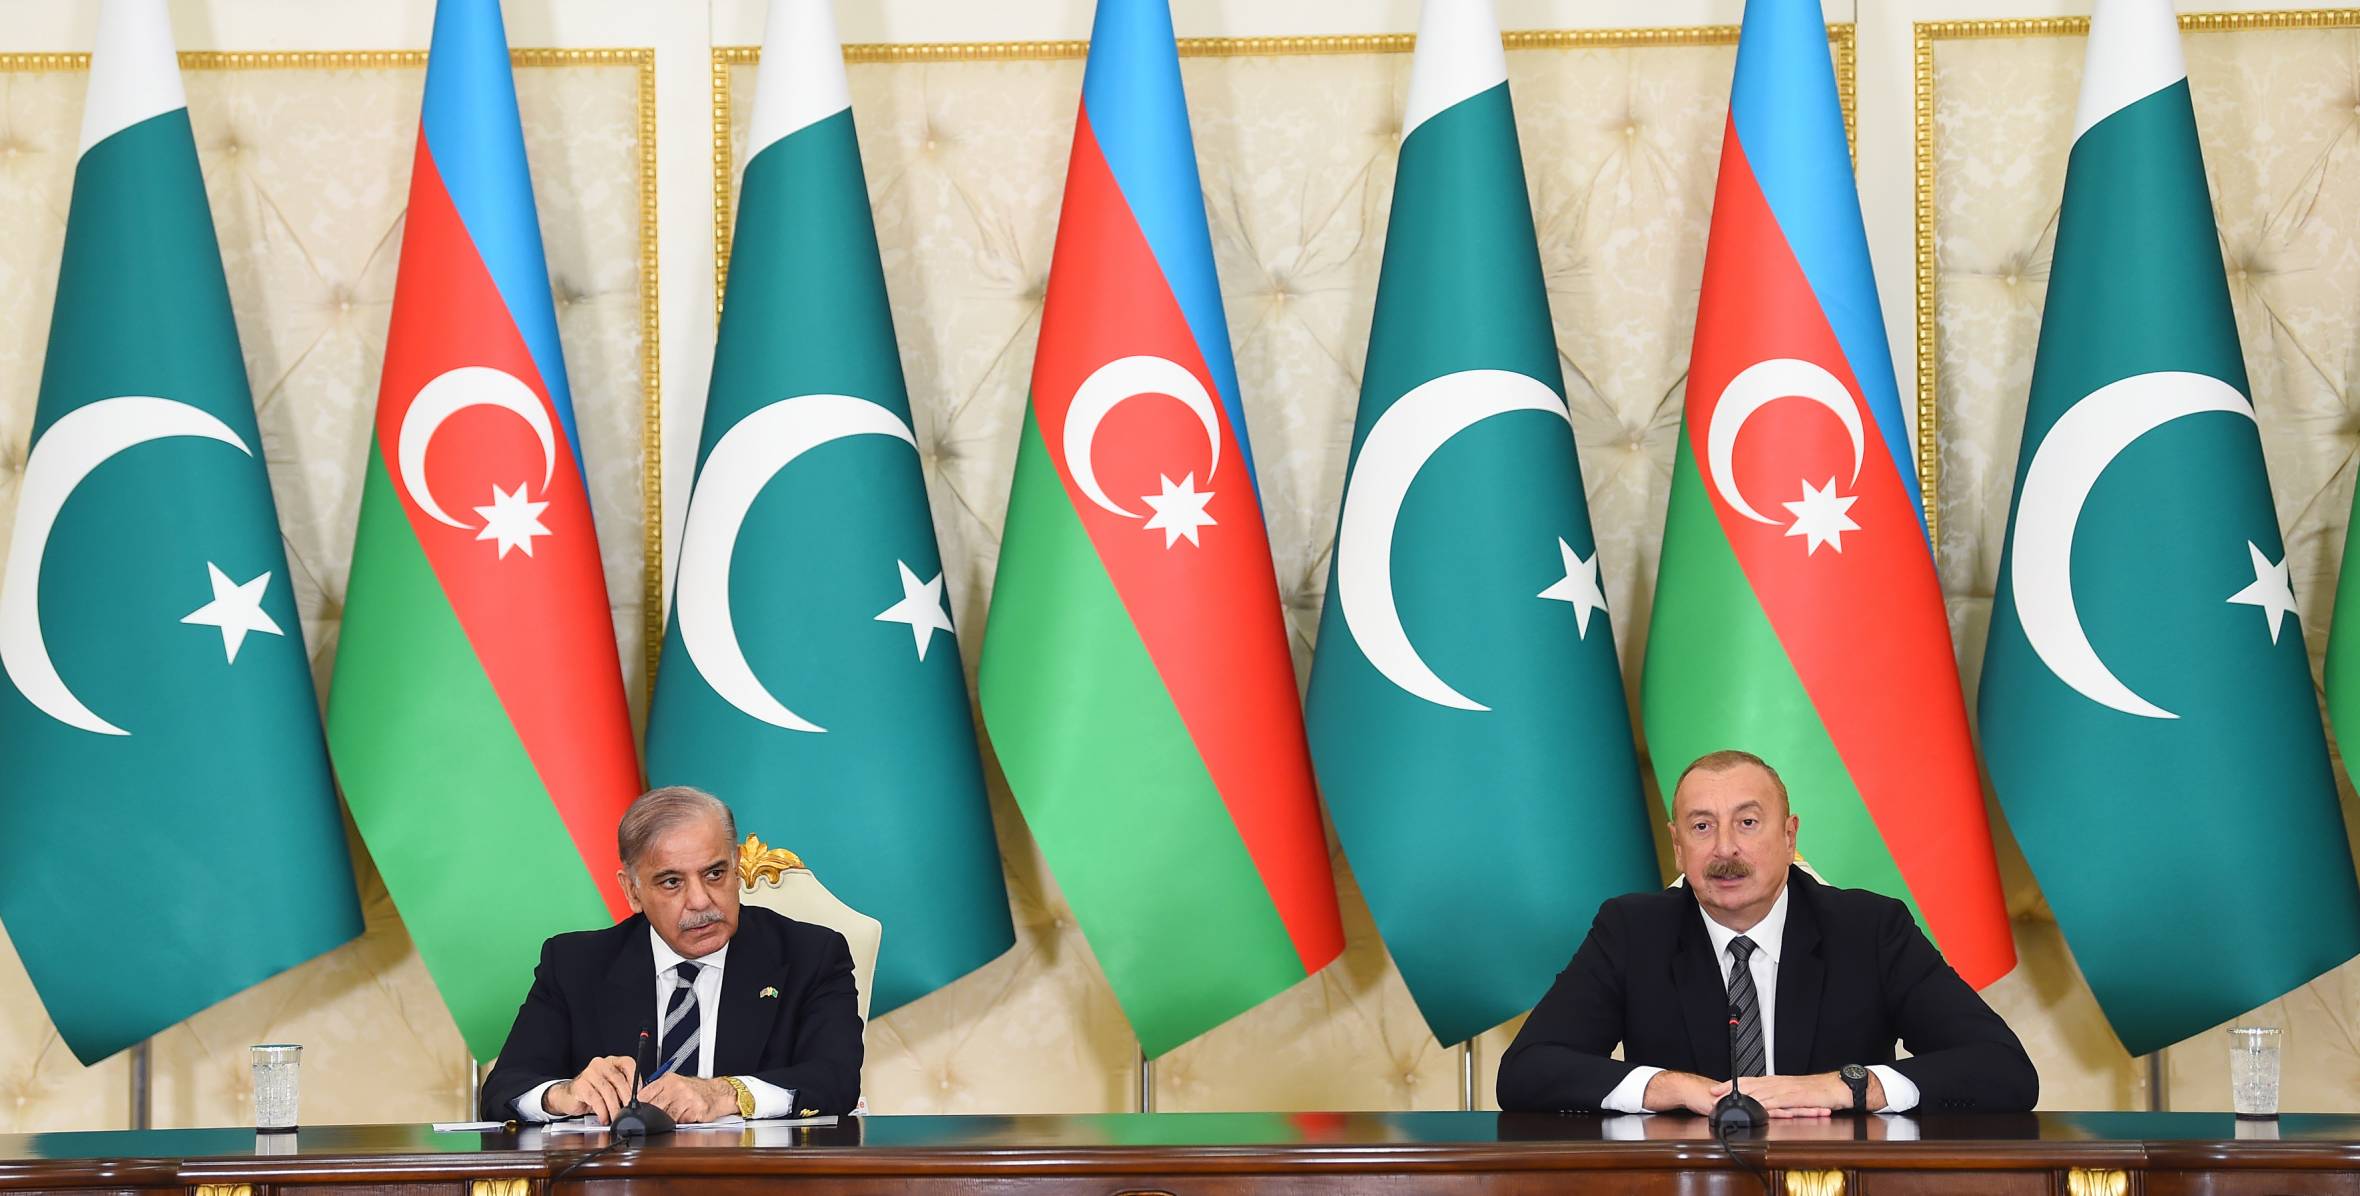 Ilham Aliyev and Prime Minister Muhammad Shehbaz Sharif made press statements